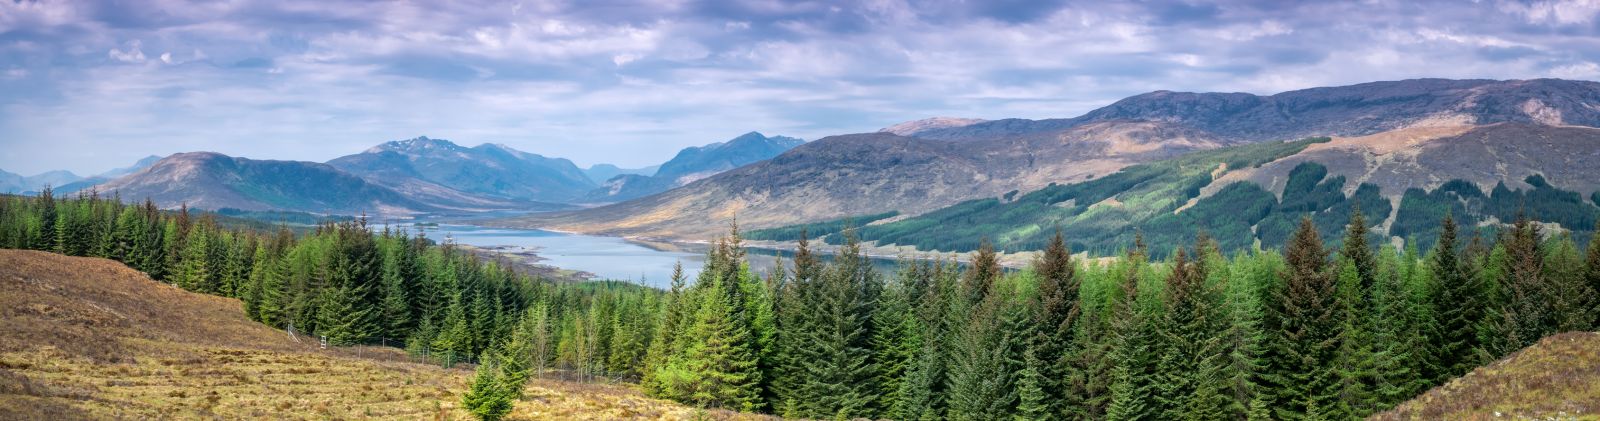 View of Scottish landscape banner image